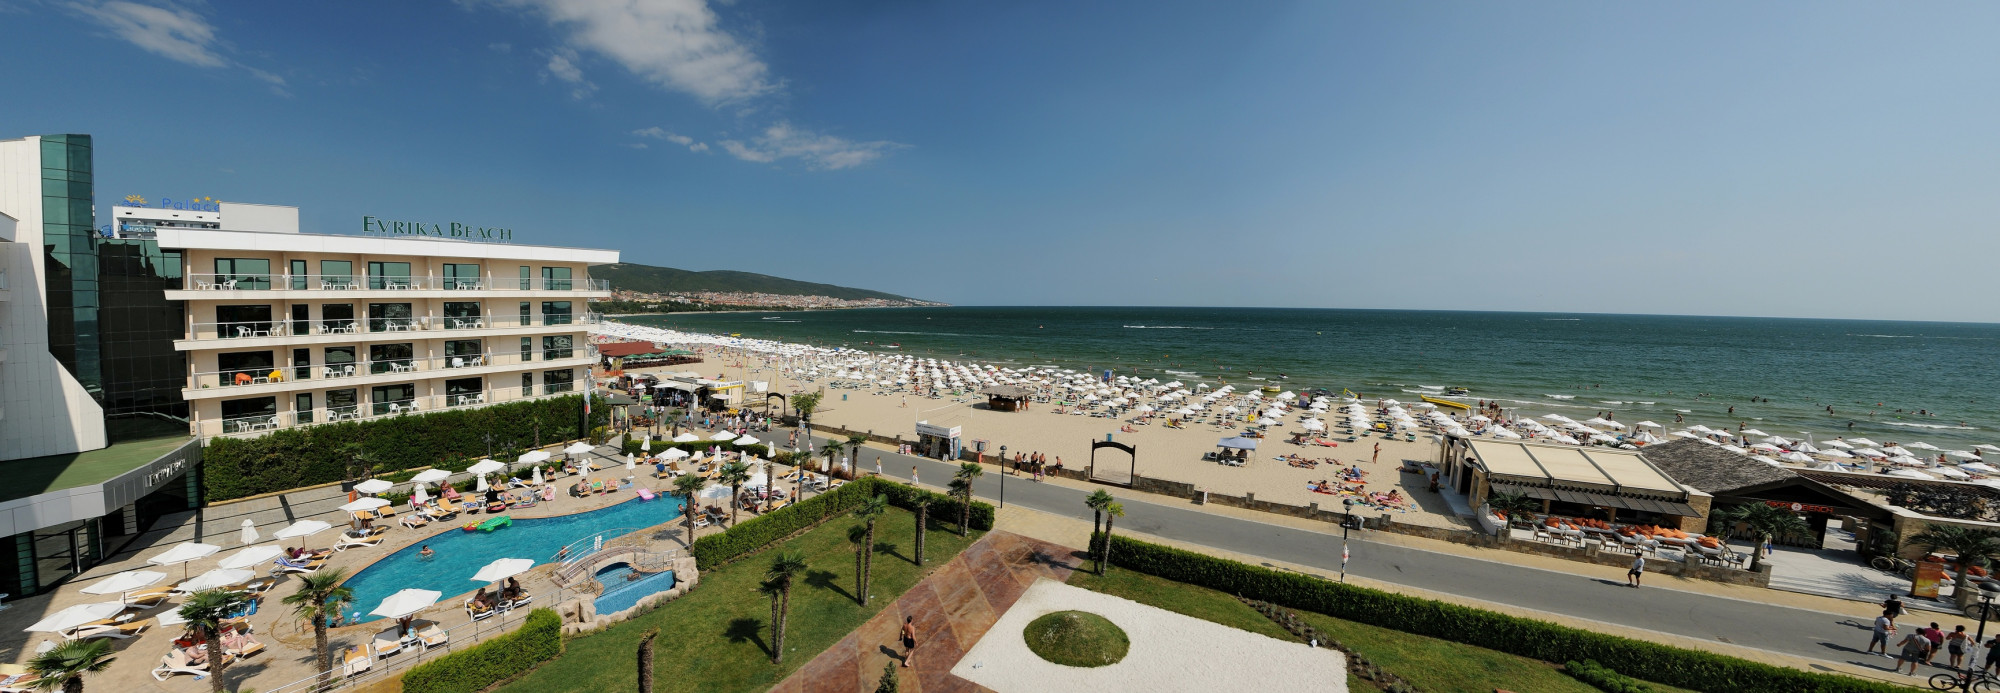 DIT Evrika Beach Club Hotel / Bulgarien - Sonnenstrand / front